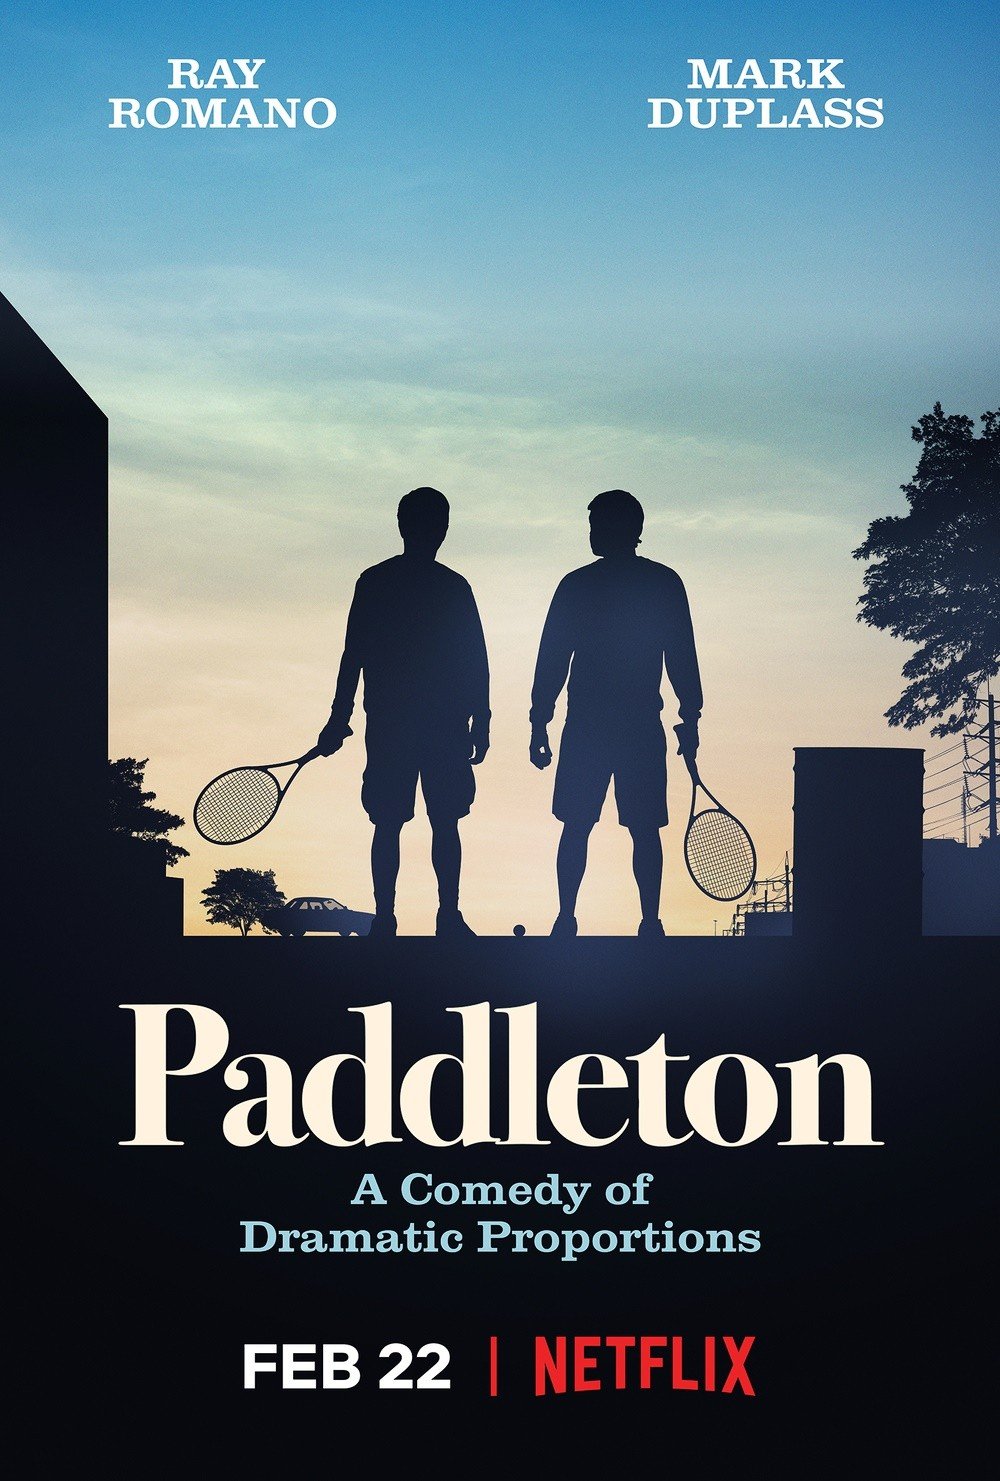 Nonton film Paddleton layarkaca21 indoxx1 ganool online streaming terbaru